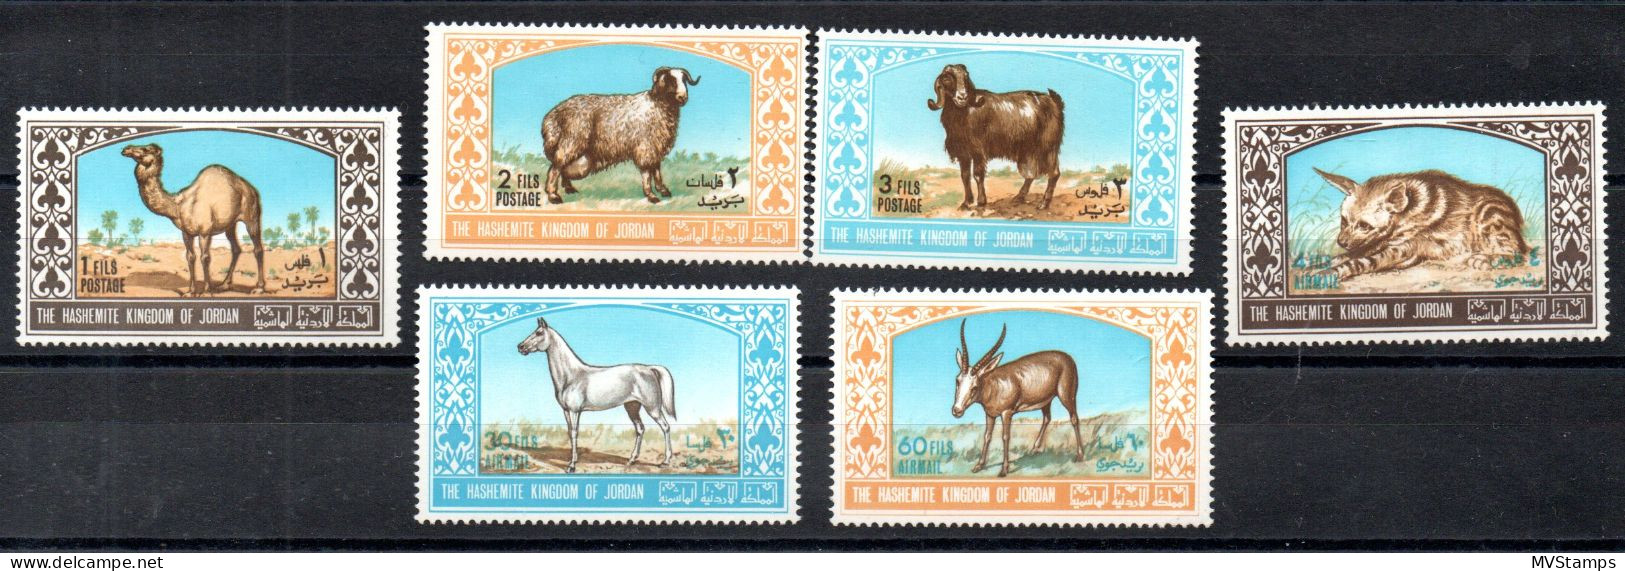 Jordan 1967 Set Animals/Tiere Stamps (Michel 669/74) Nice MNH - Jordanie